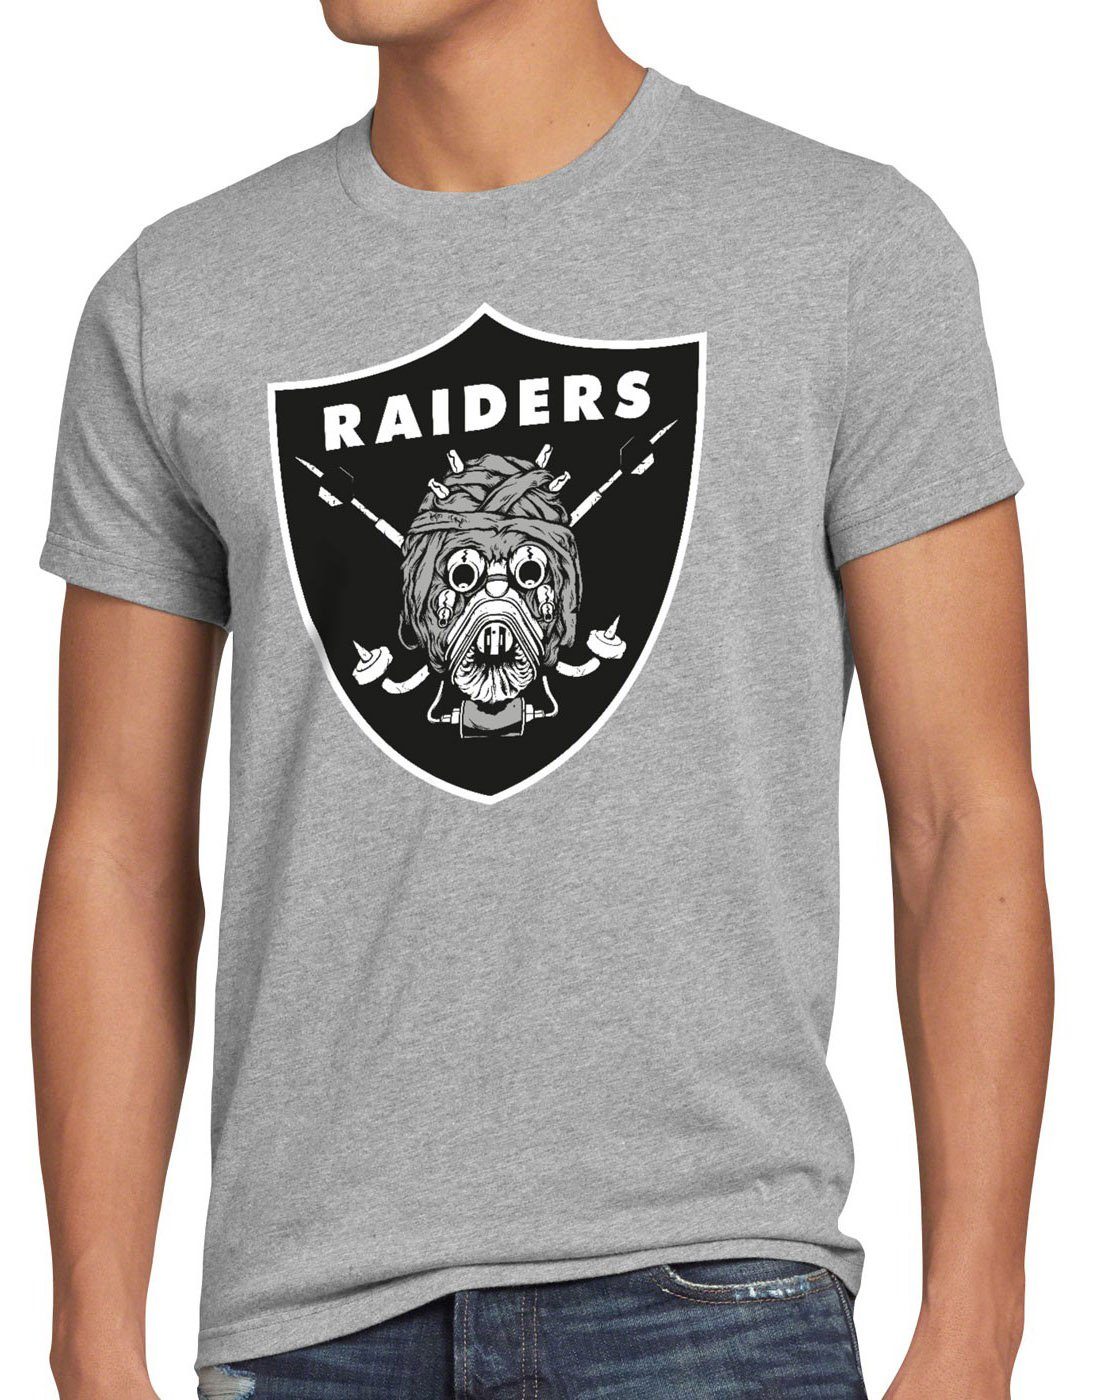 style3 Print-Shirt team Raiders T-Shirt Tusken tatooine Herren meliert grau football american